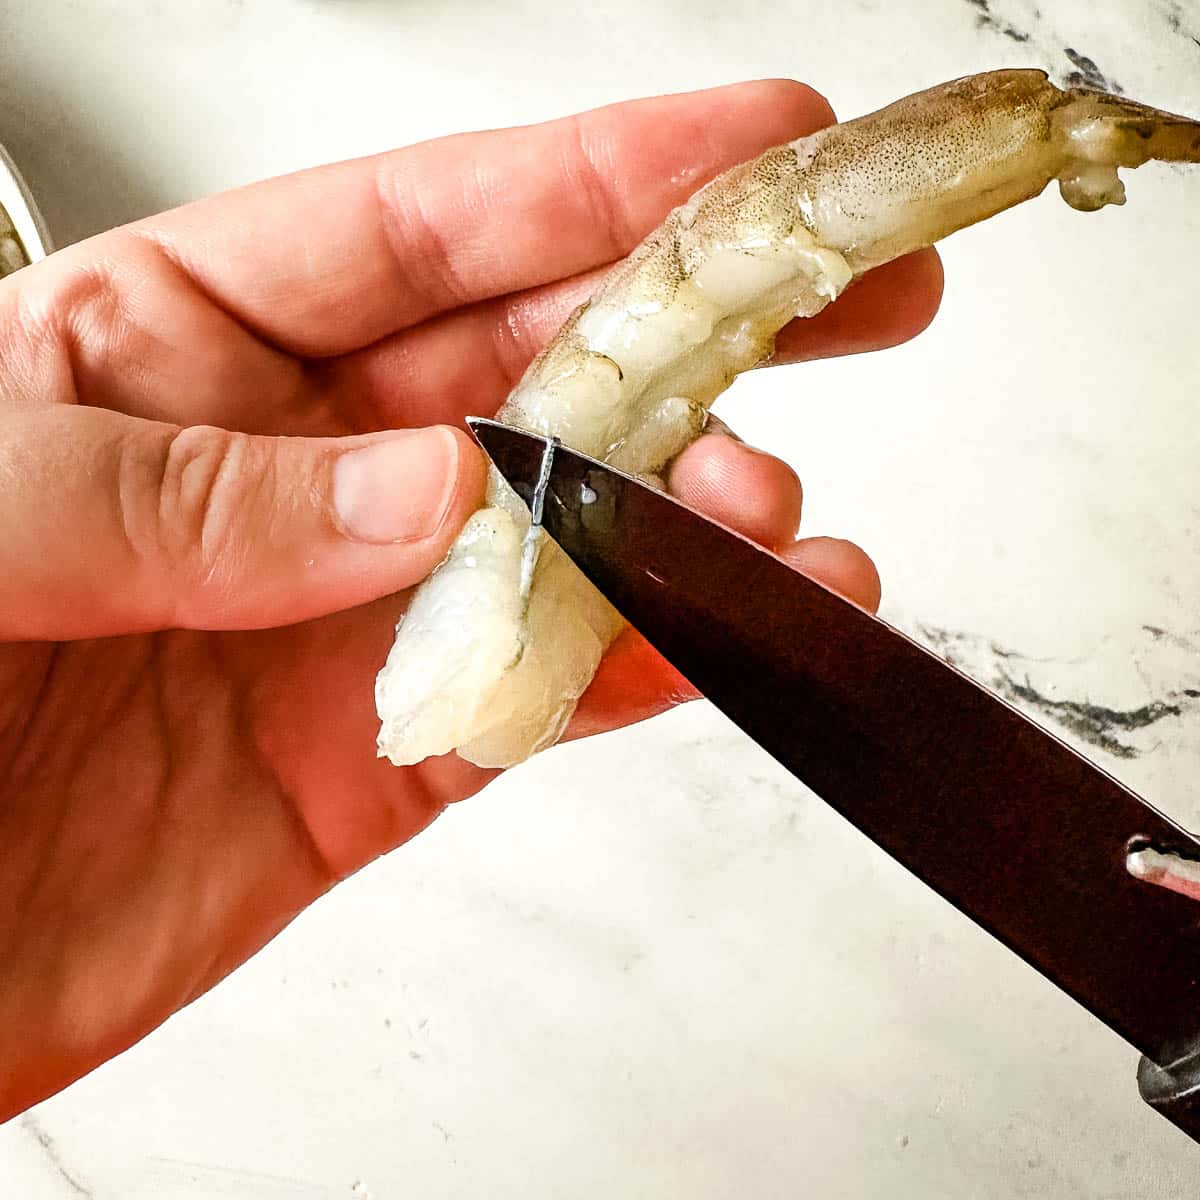 deveining shrimp with a black paring knife.